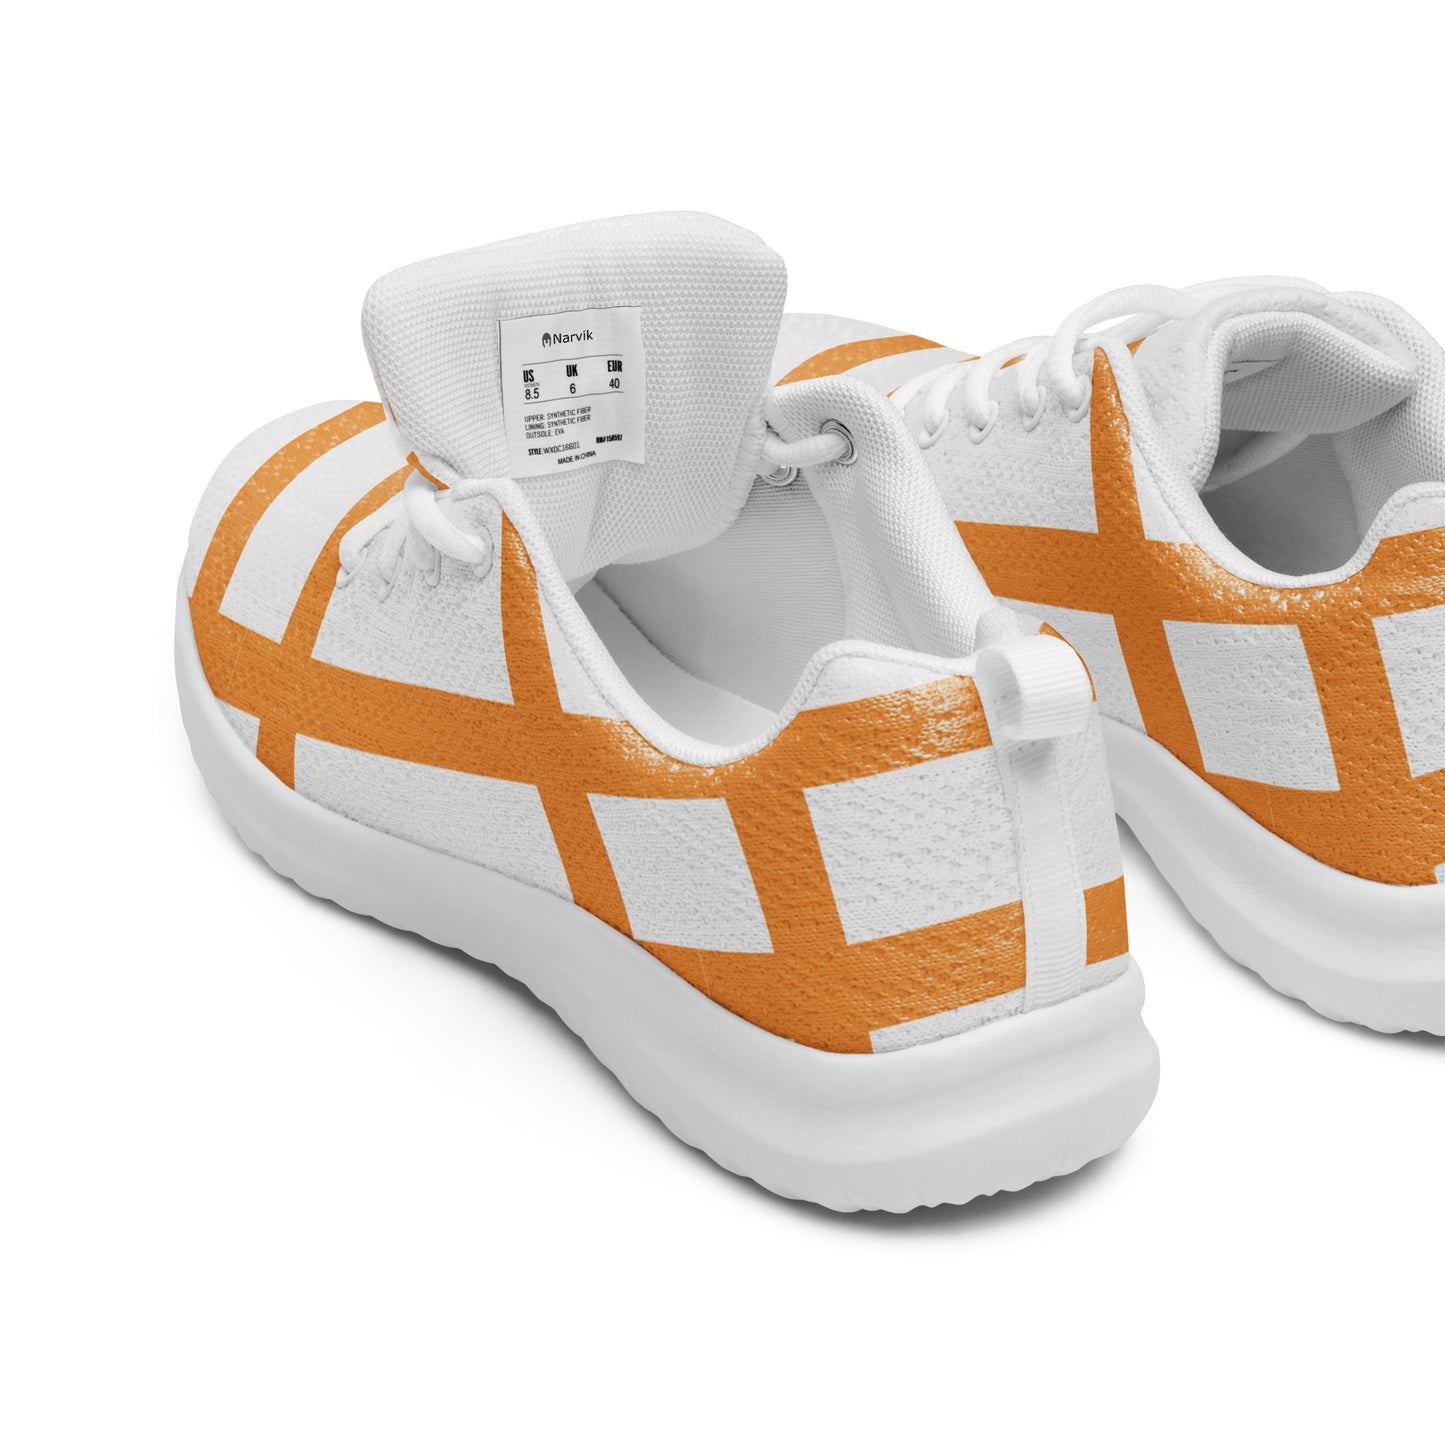 Women’s athletic shoes - WS 101 Orange